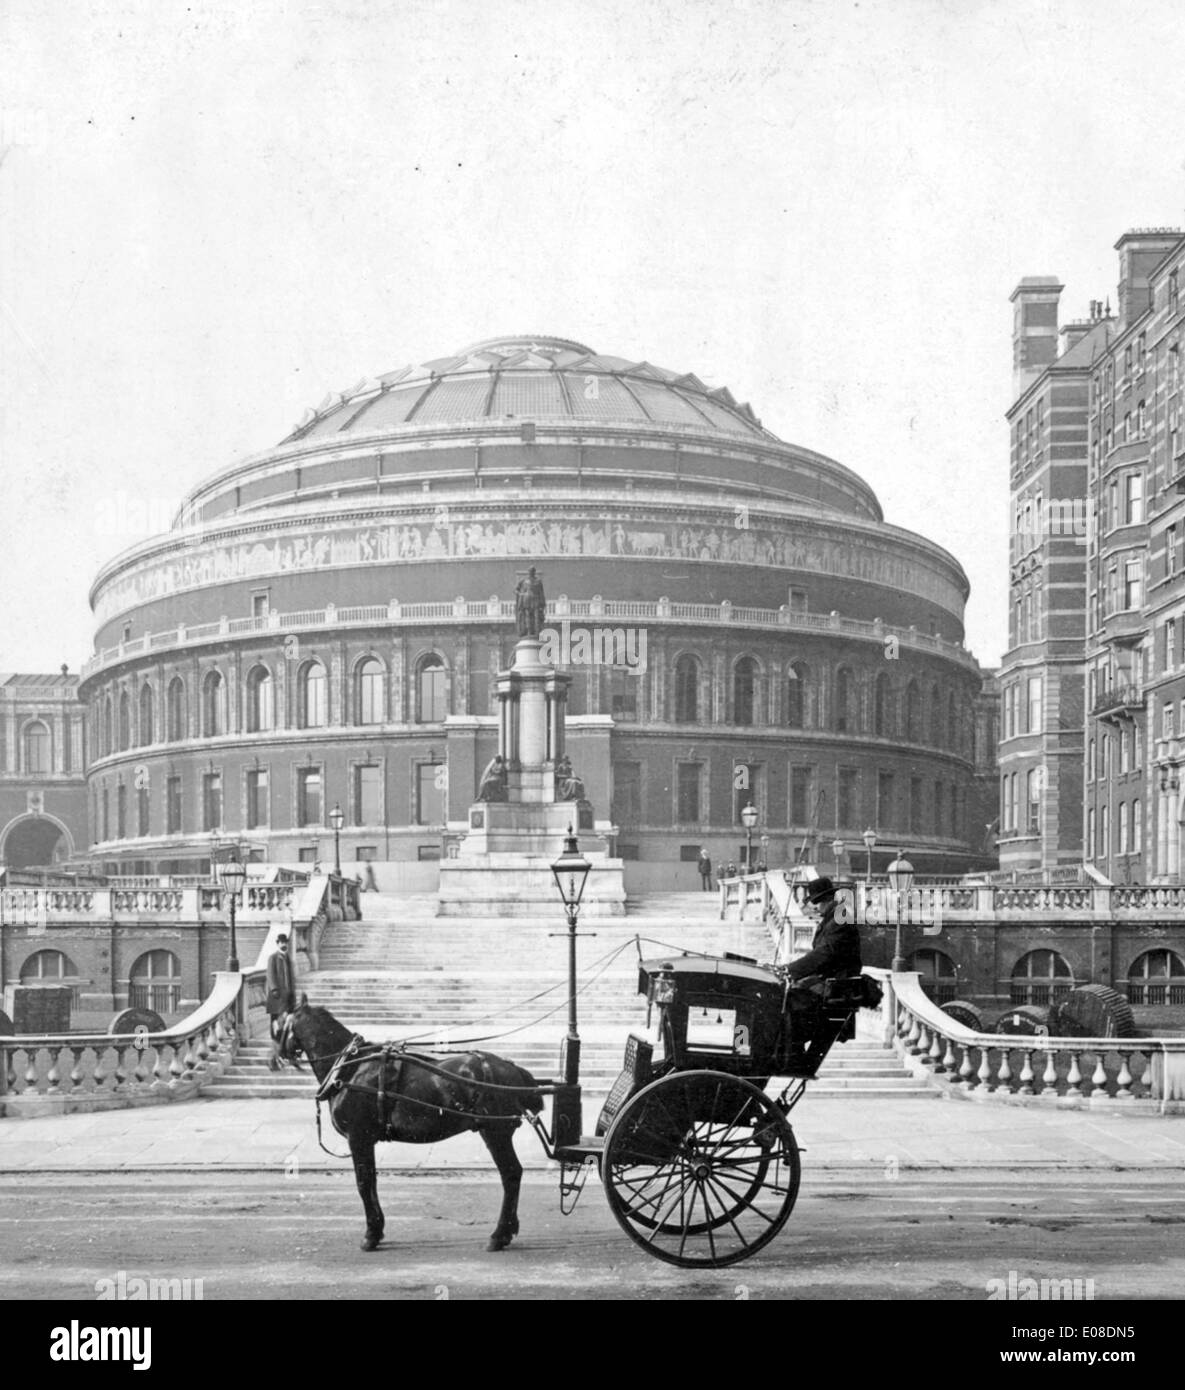 Historic Albert Hall and hansom cab, London, England, UK Stock Photo